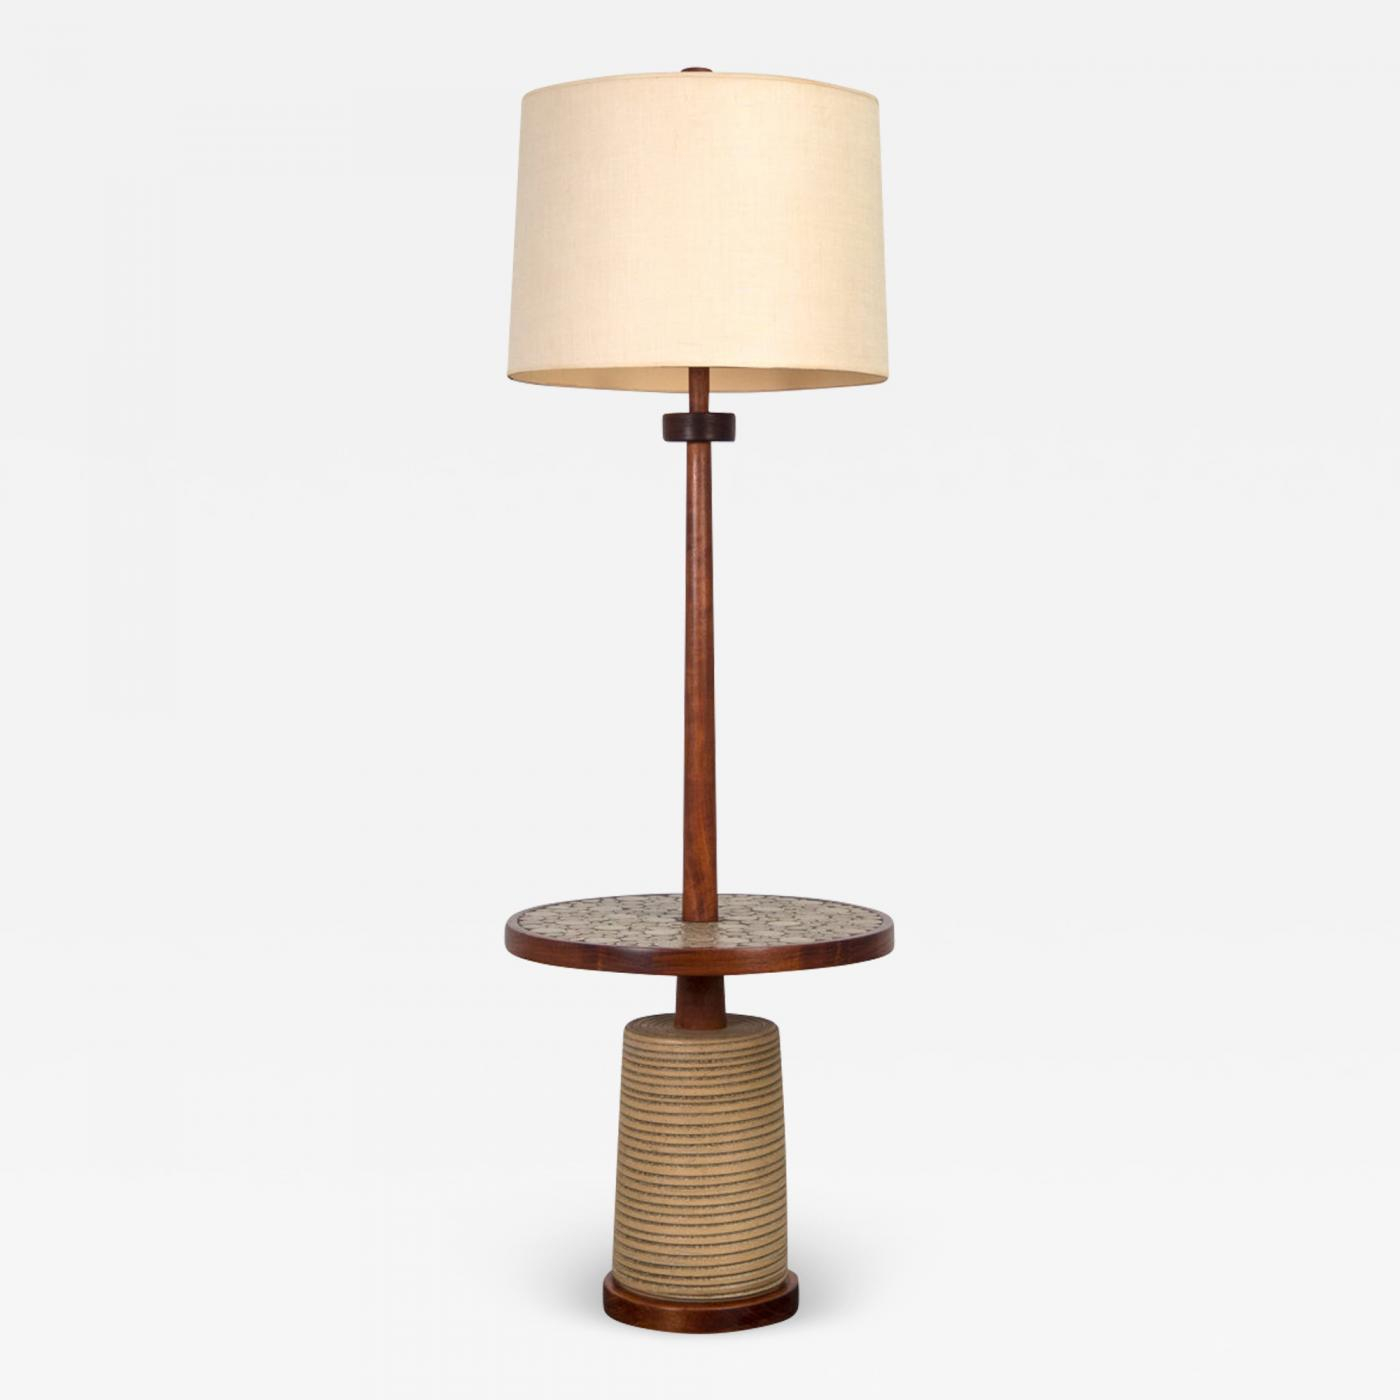 Gordon Jane Martz Martz Floor Lamp With Table Base with regard to dimensions 1400 X 1400